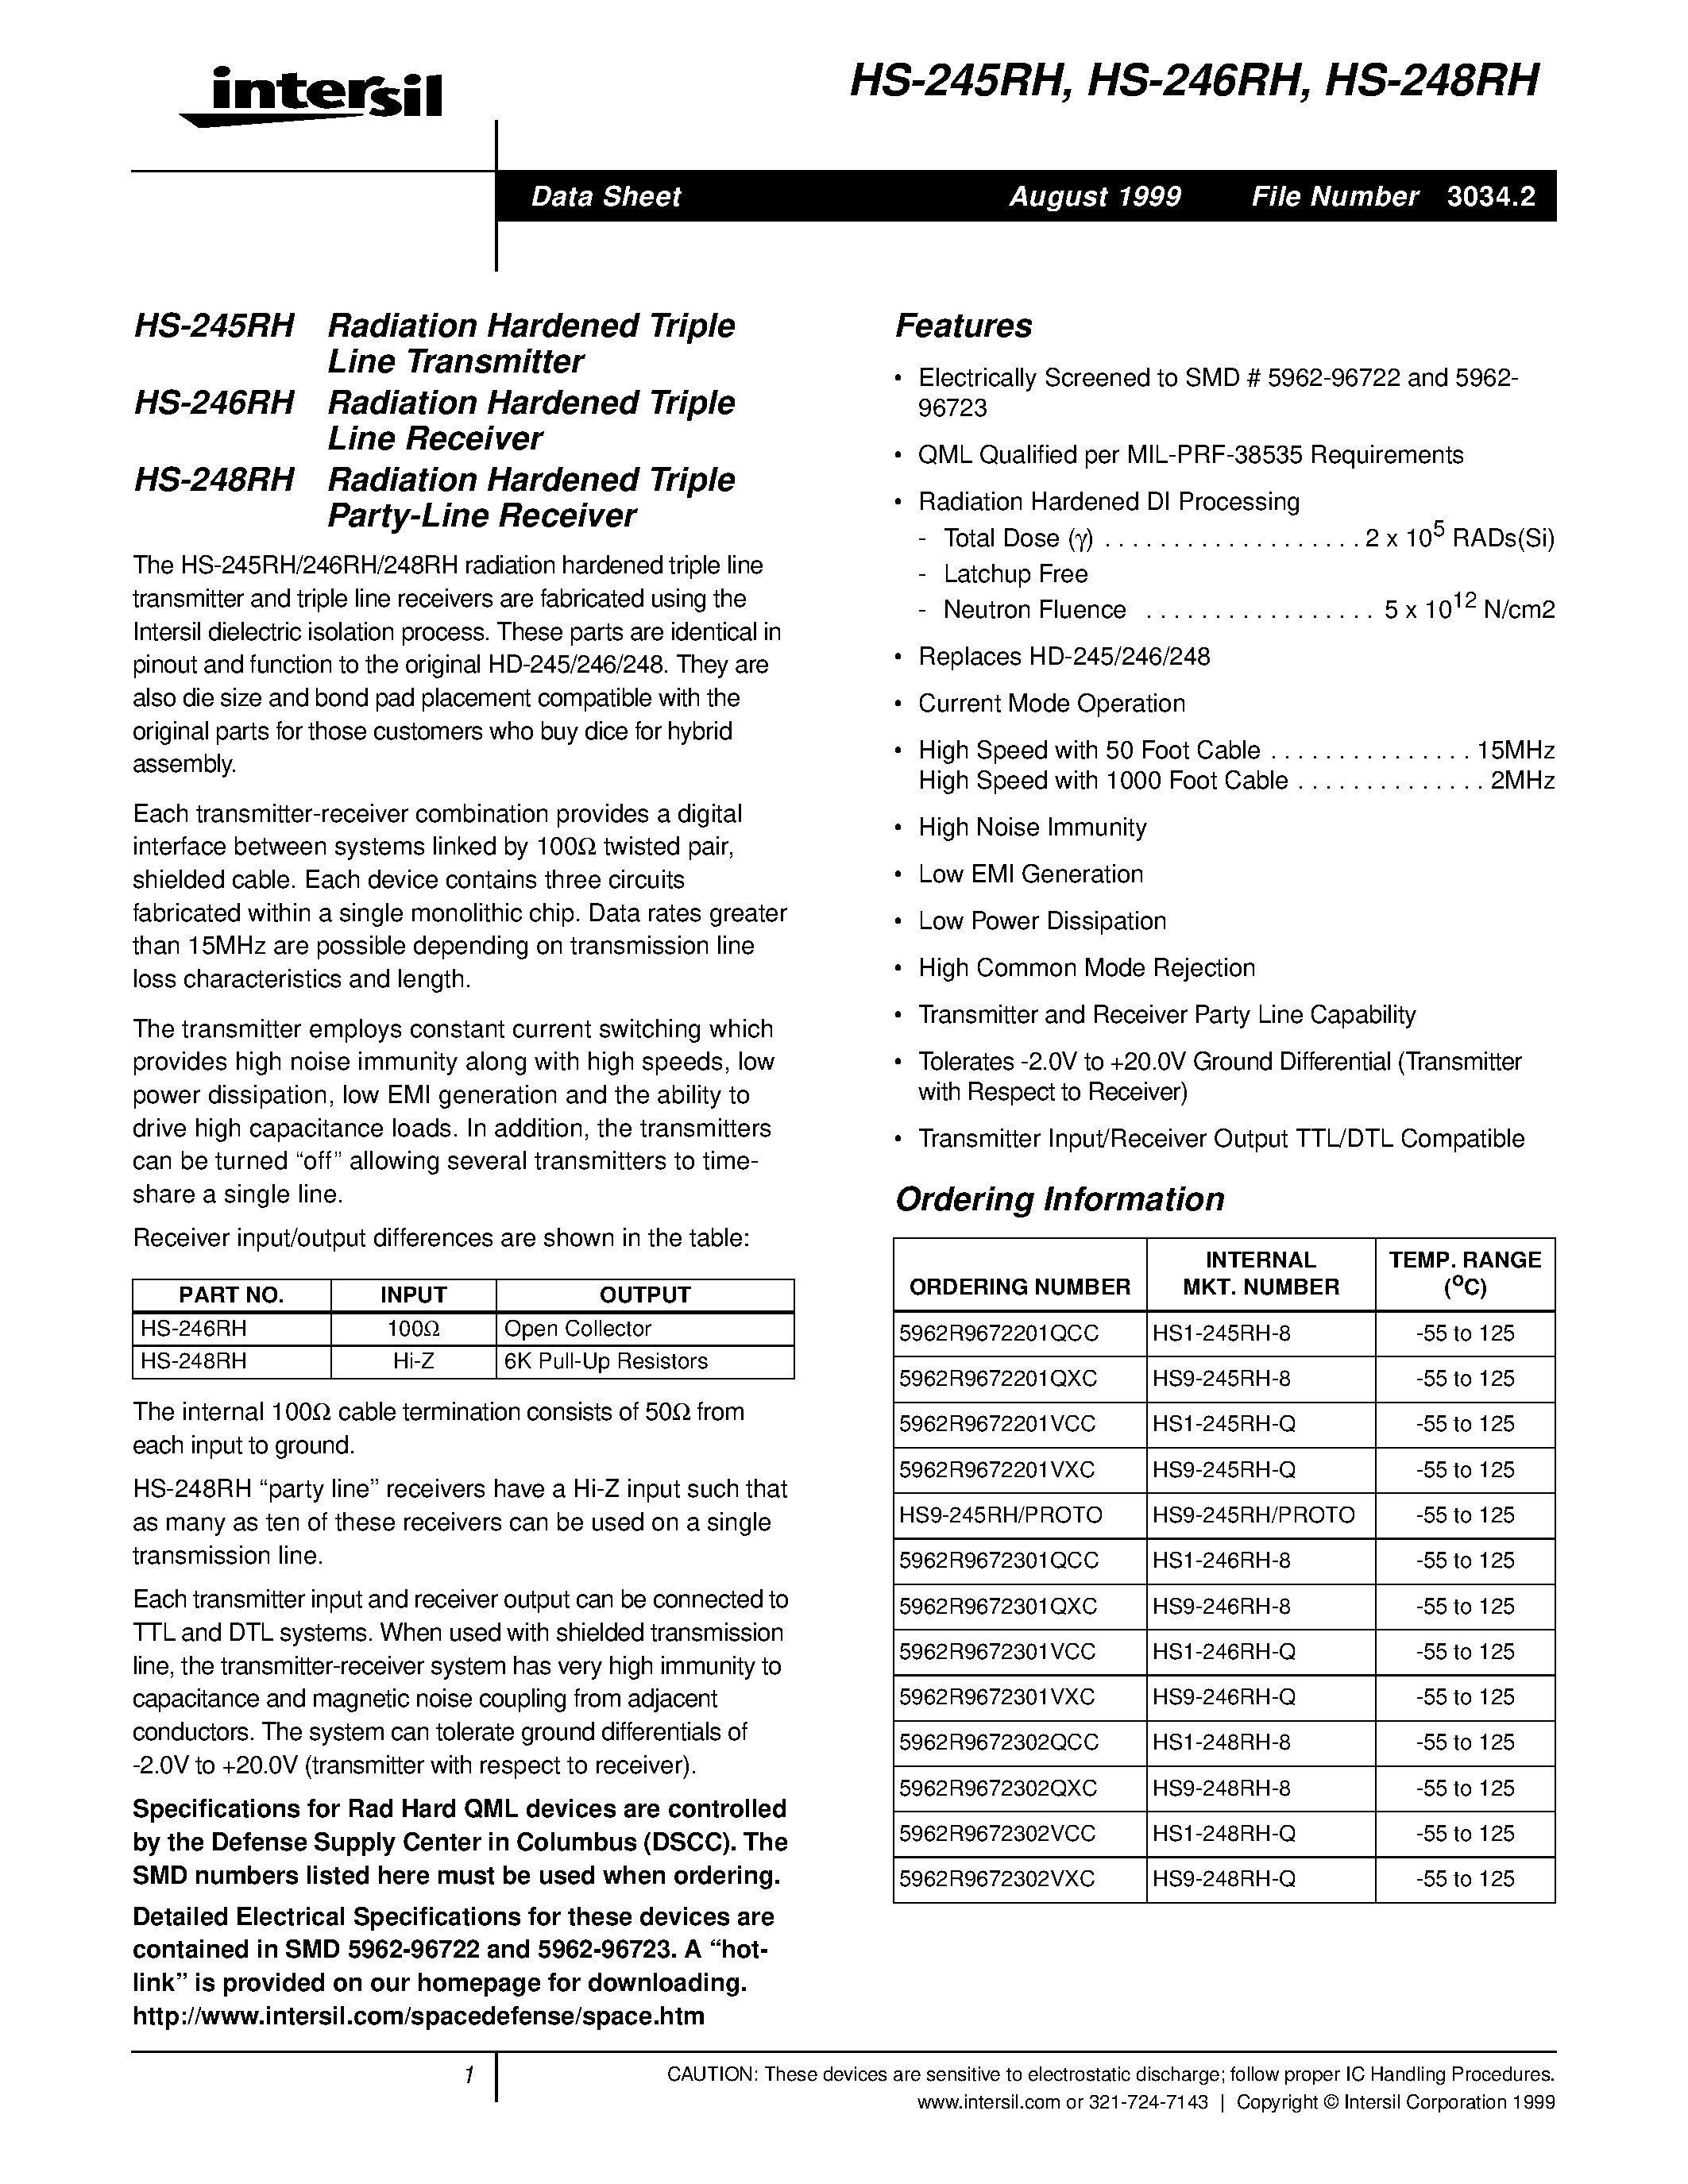 Datasheet HS1-246RH-8 - Radiation Hardened Triple Line(party-Line) Transmitter page 1